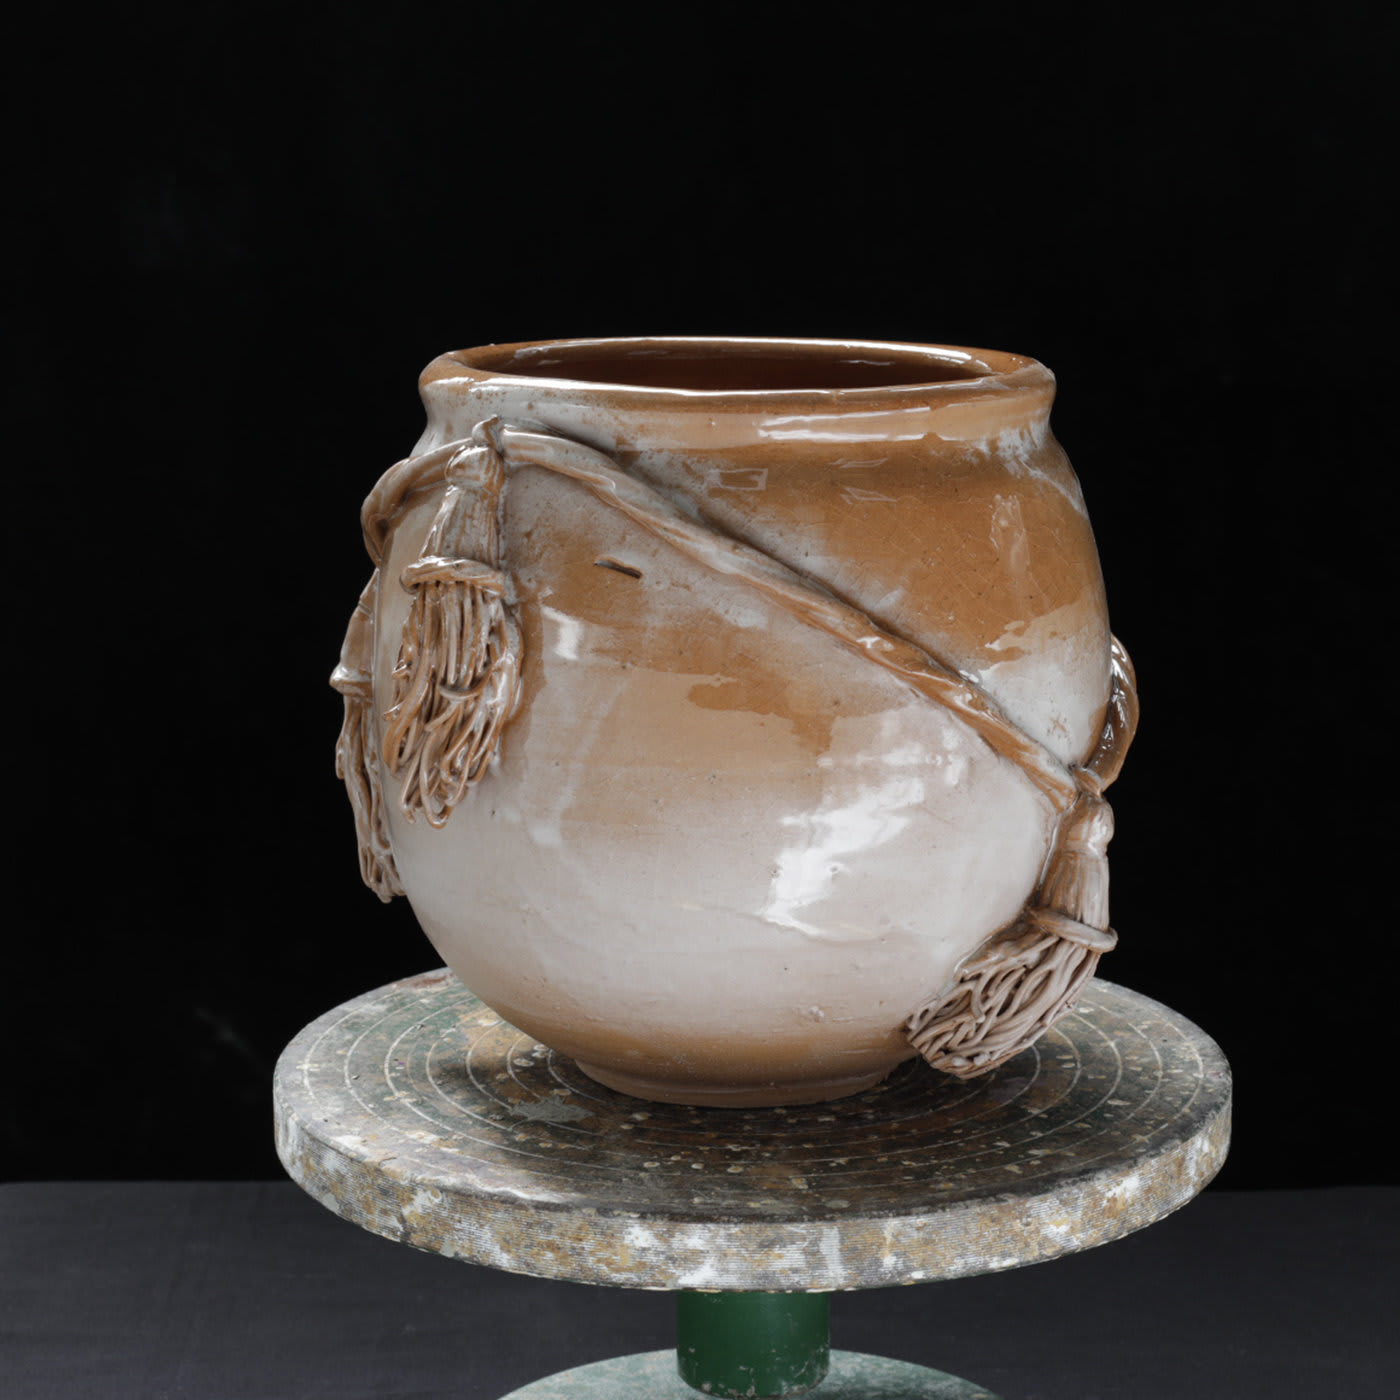 Vase With Tassels #2 - Sebastiano Leta